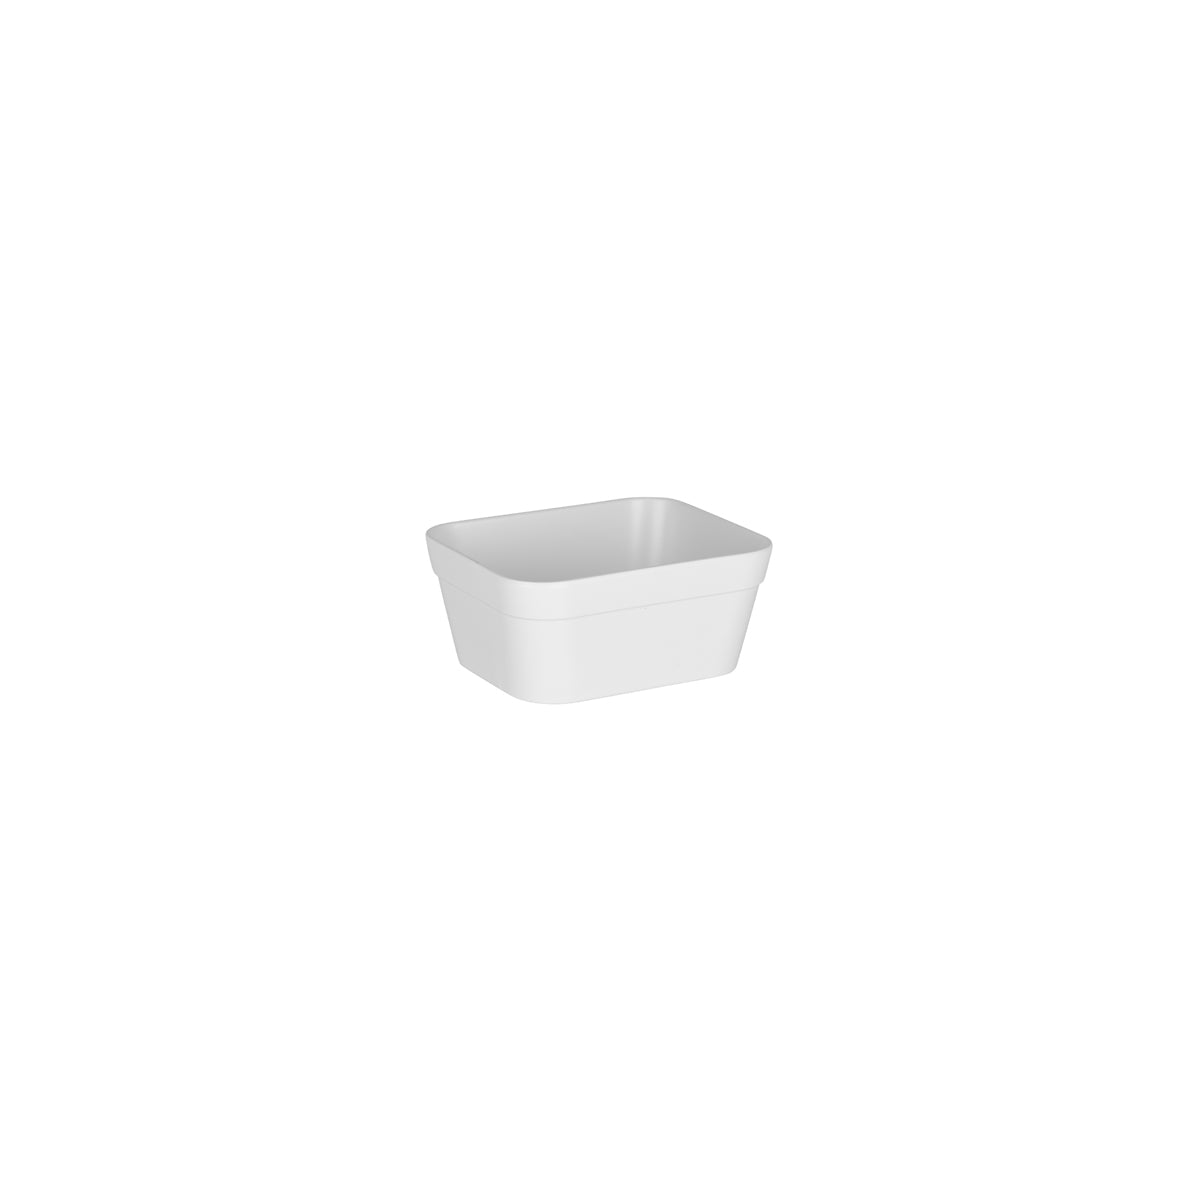 46387 Zicco Bento Box White Insert Bowl Solid Medium Tomkin Australia Hospitality Supplies